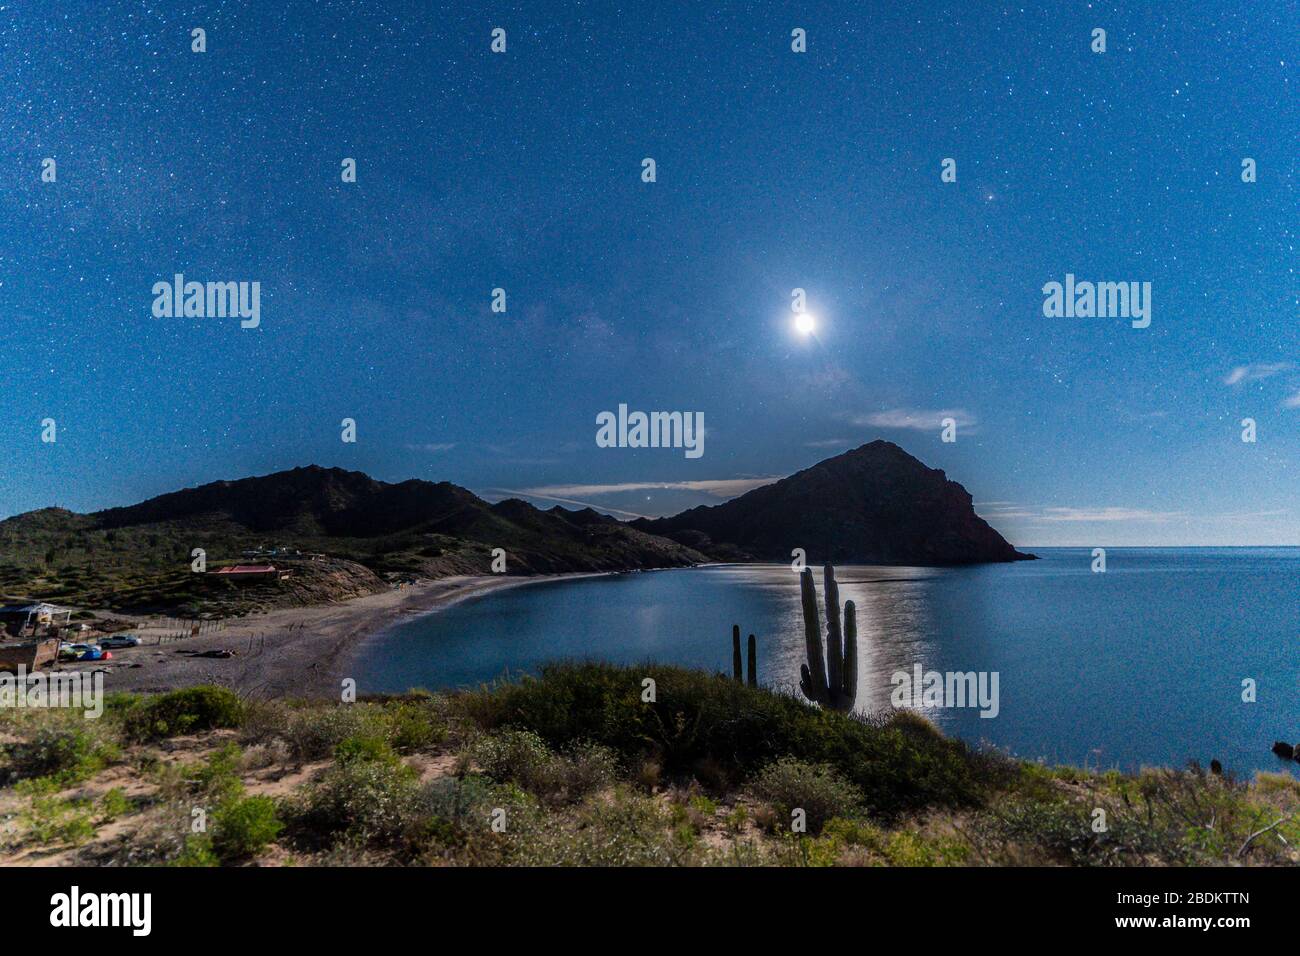 night of stars and moonlight on El Colorado beach, Sonora Mexico. Sonora desert, very similar to the Arizona and Baja California desert. Gulf of Calif Stock Photo